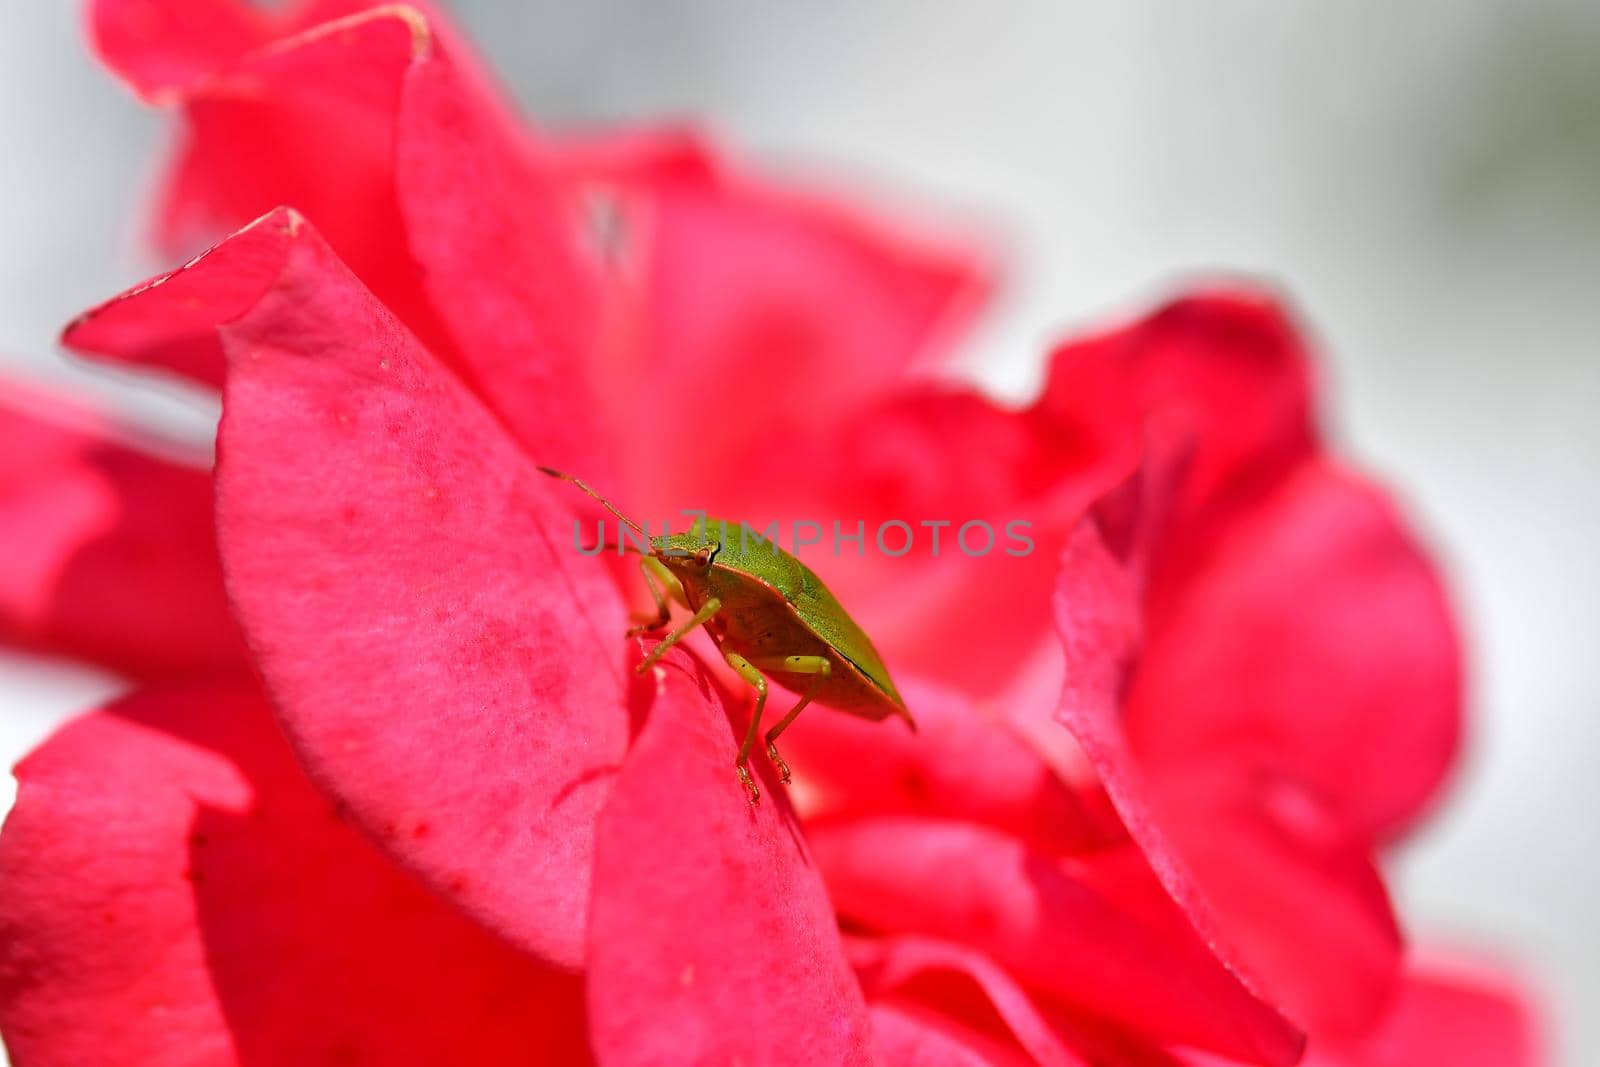 green shield bug, nymph on a rose flower by Jochen